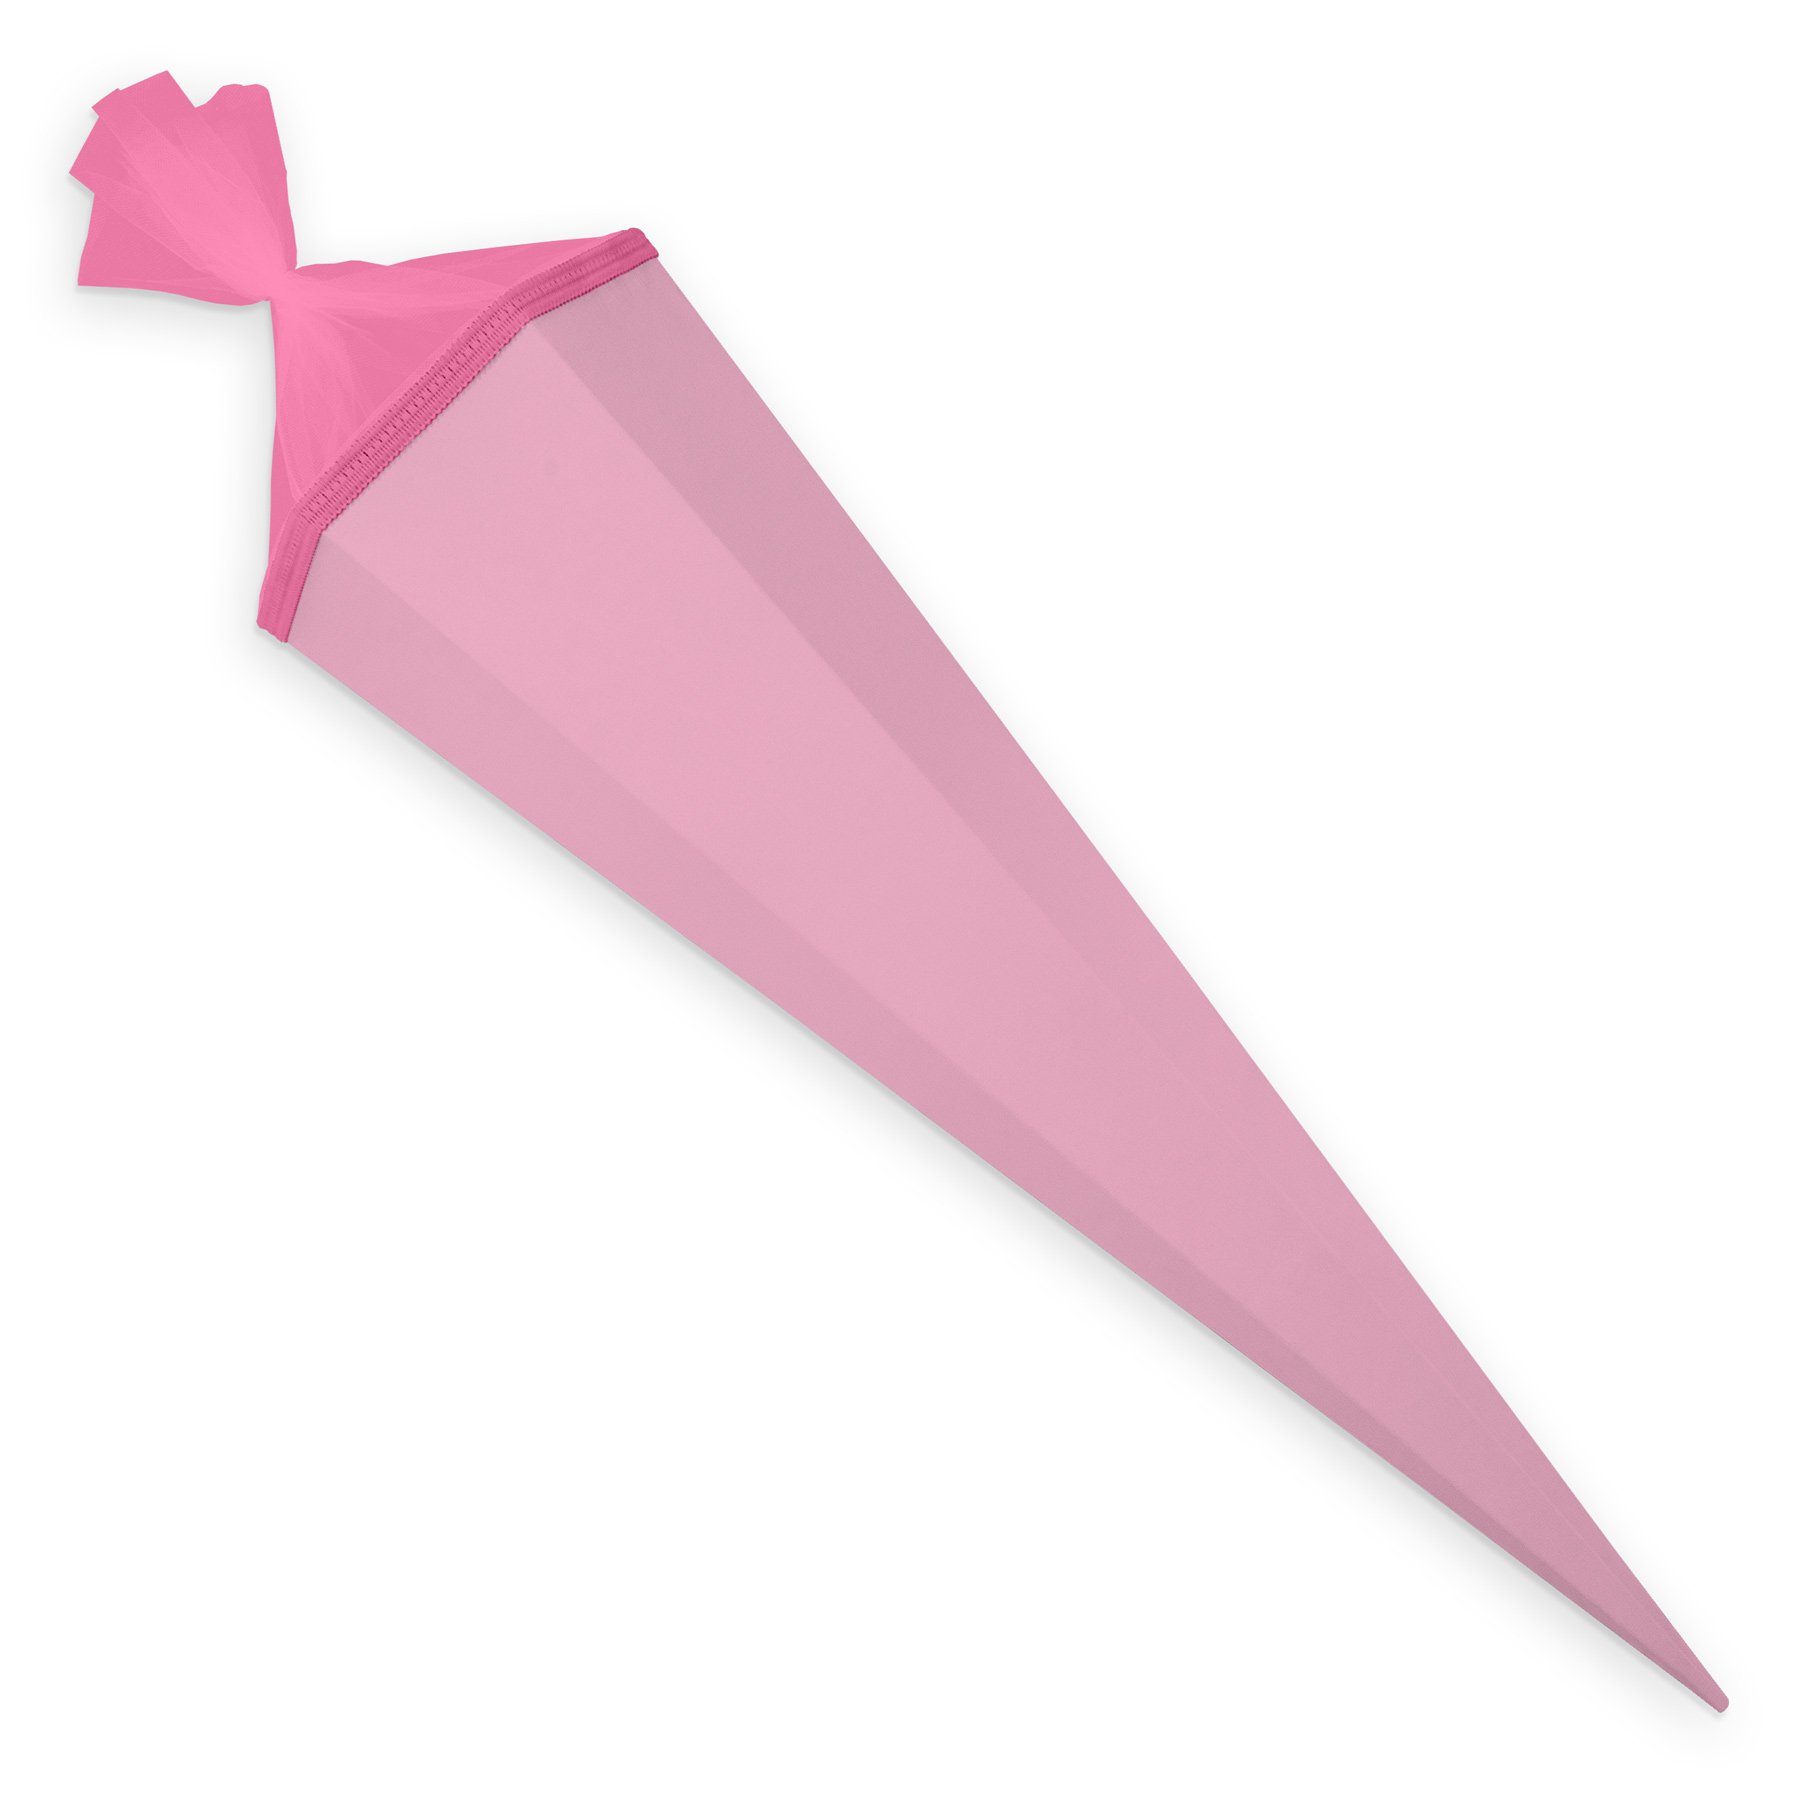 Schultüte mit itenga rosa Verschluss 6eckig itenga Bastelschultüte